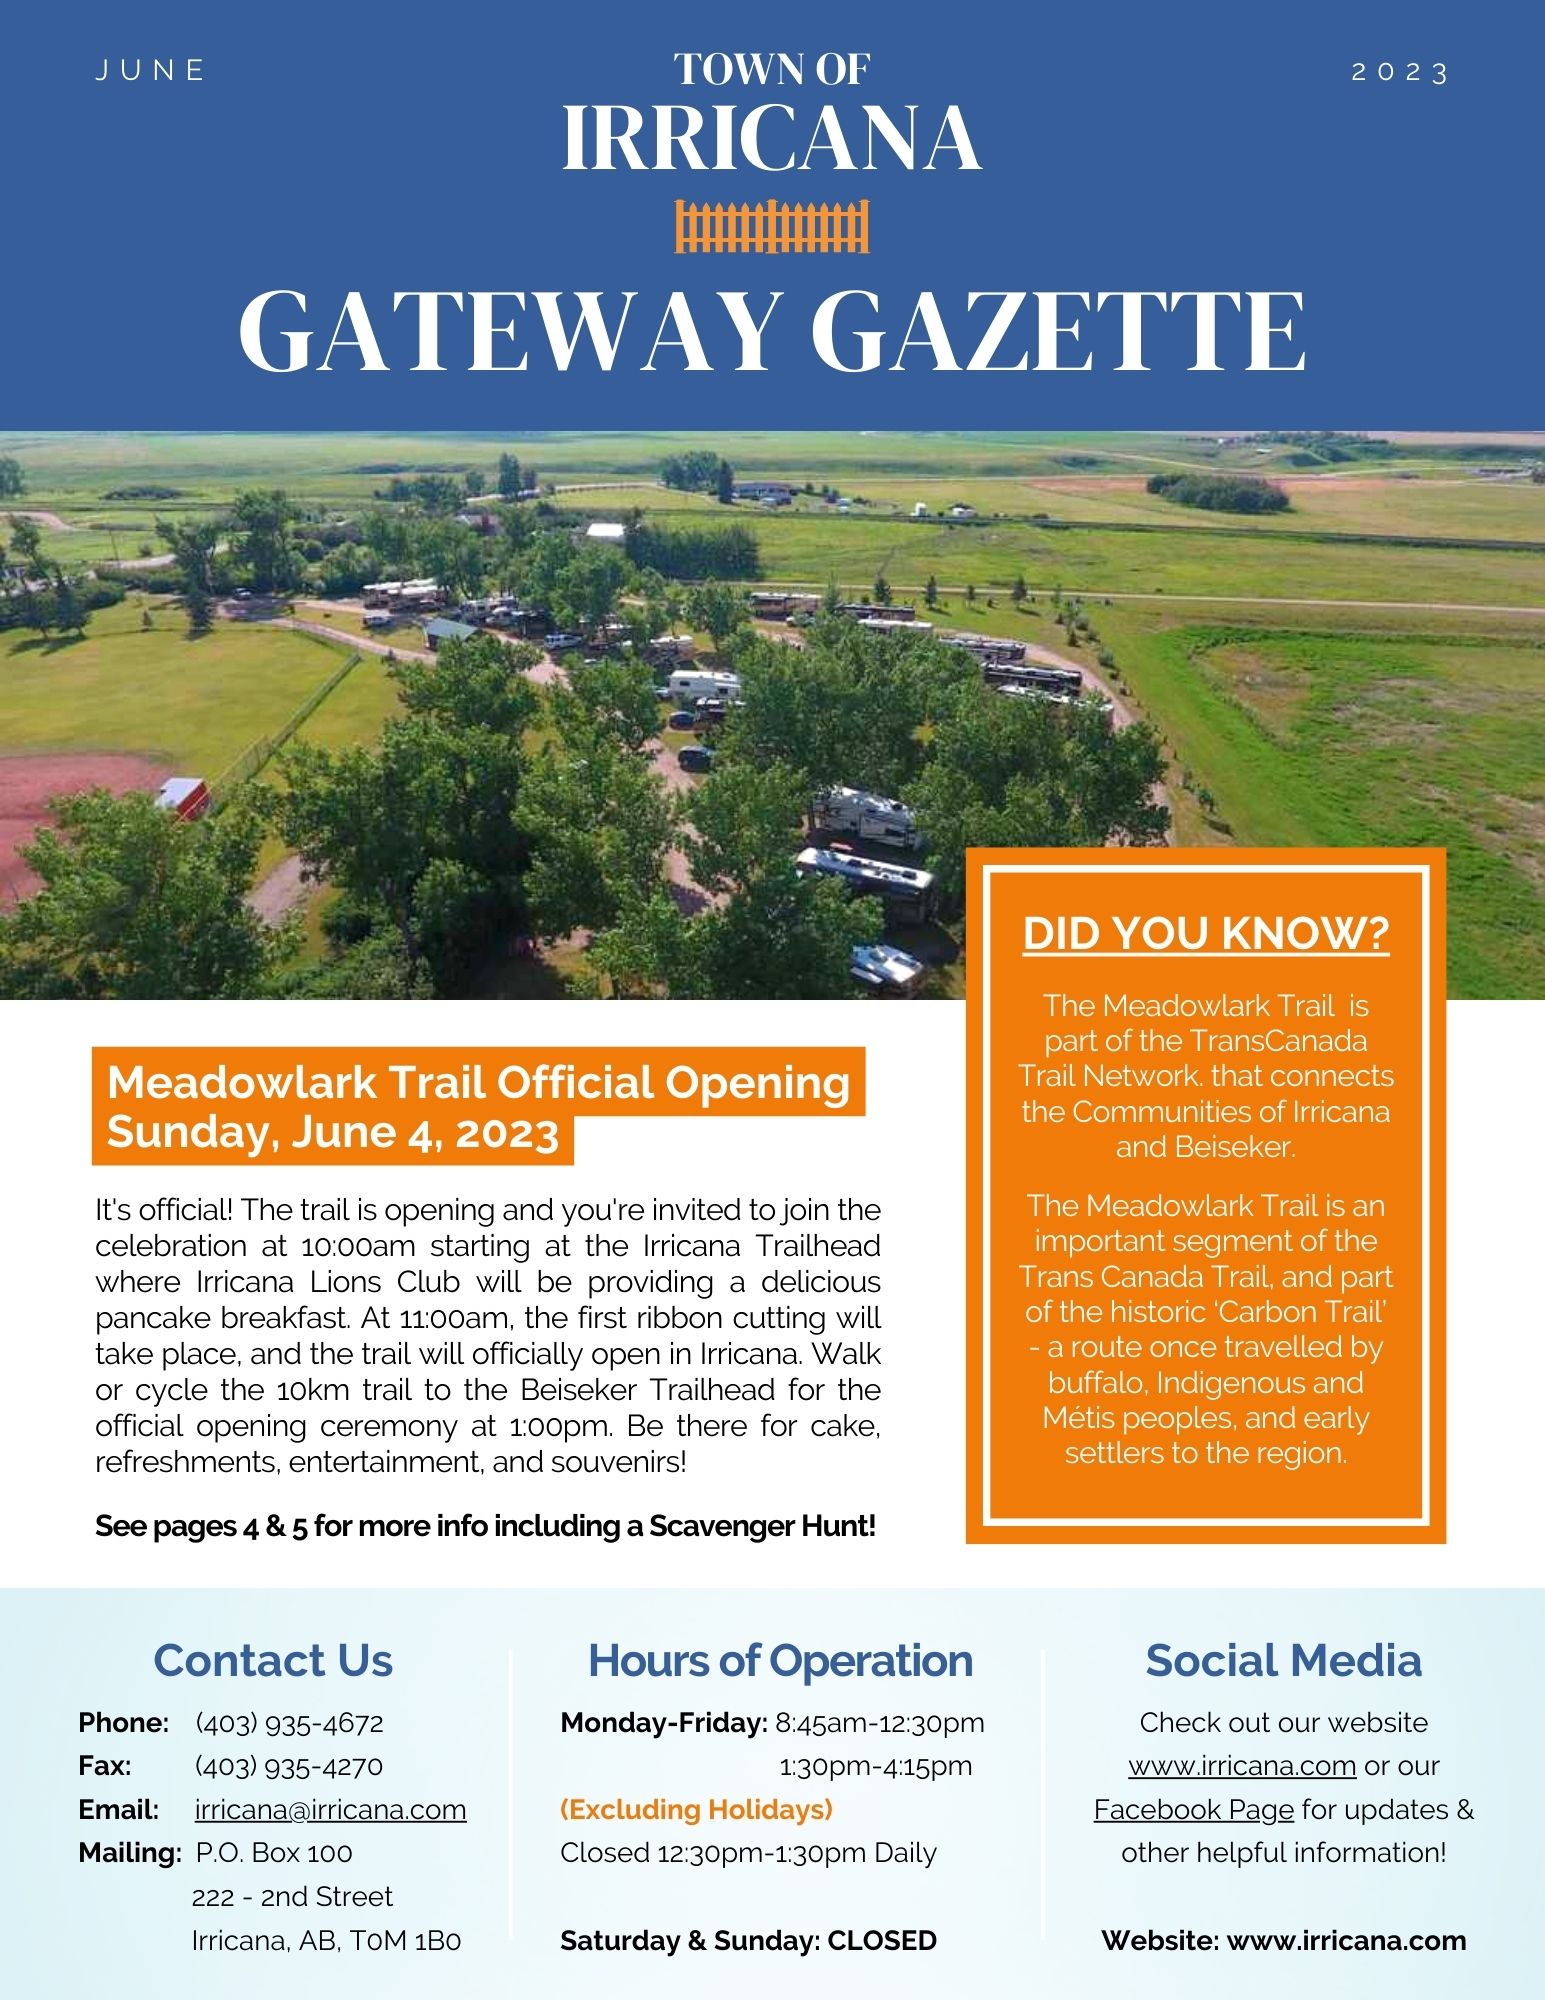 Irricana Gateway Gazette Newsletter for June, 2023